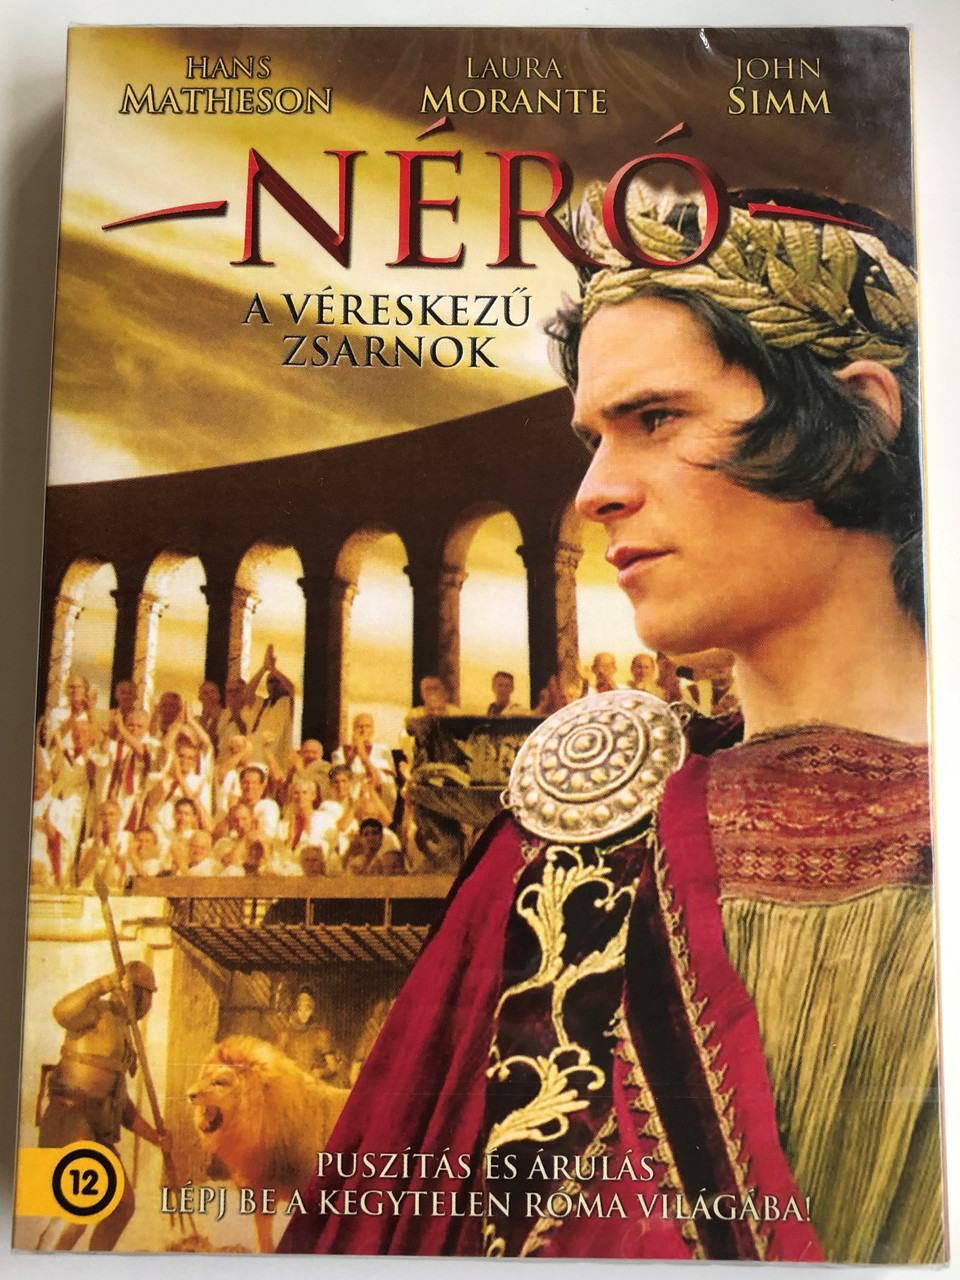 Imperium: Nerone DVD 2004 Néró a véreskezű zsarnok / Directed by Paul  Marcus / Starring: Hans Matheson, Laura Morante, John Simm, Rike Schmid -  bibleinmylanguage